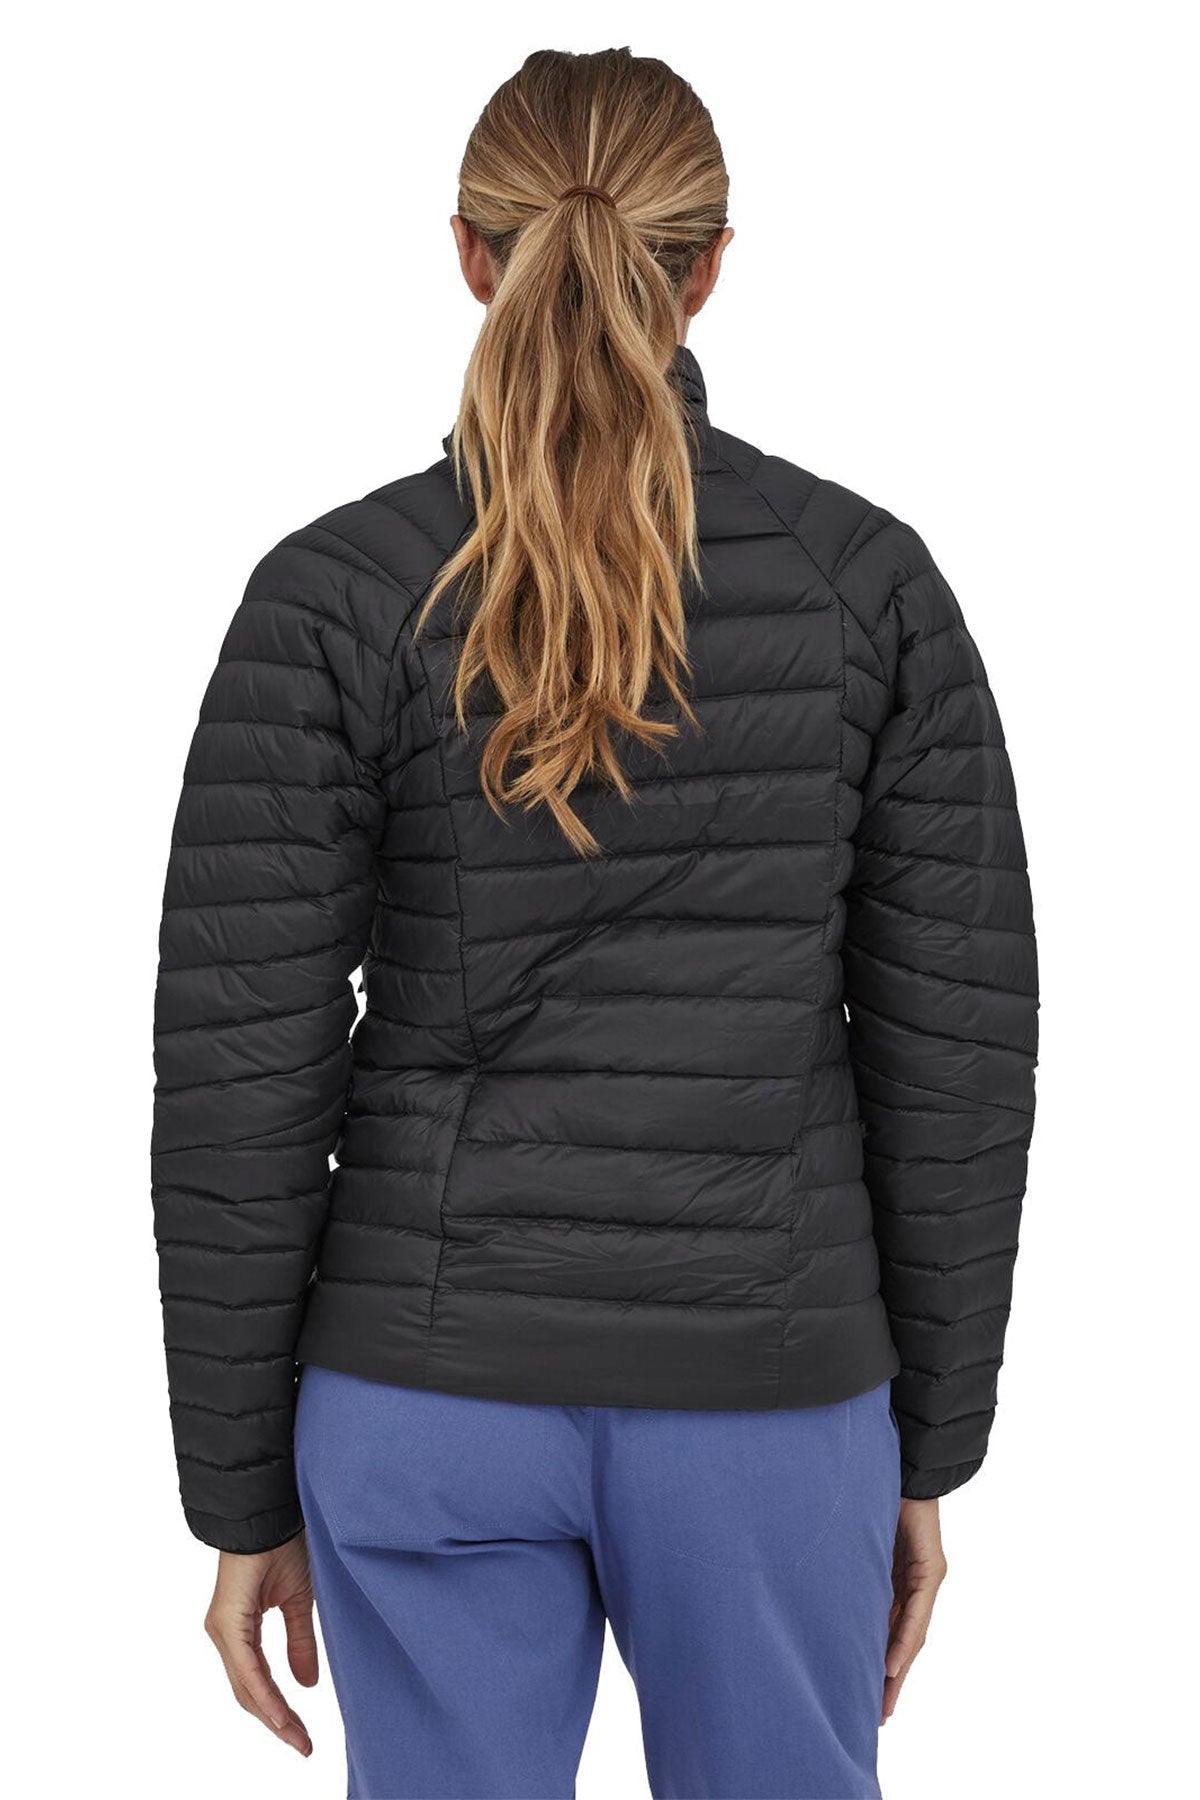 Patagonia Womens Down Sweater Custom Jackets, Black